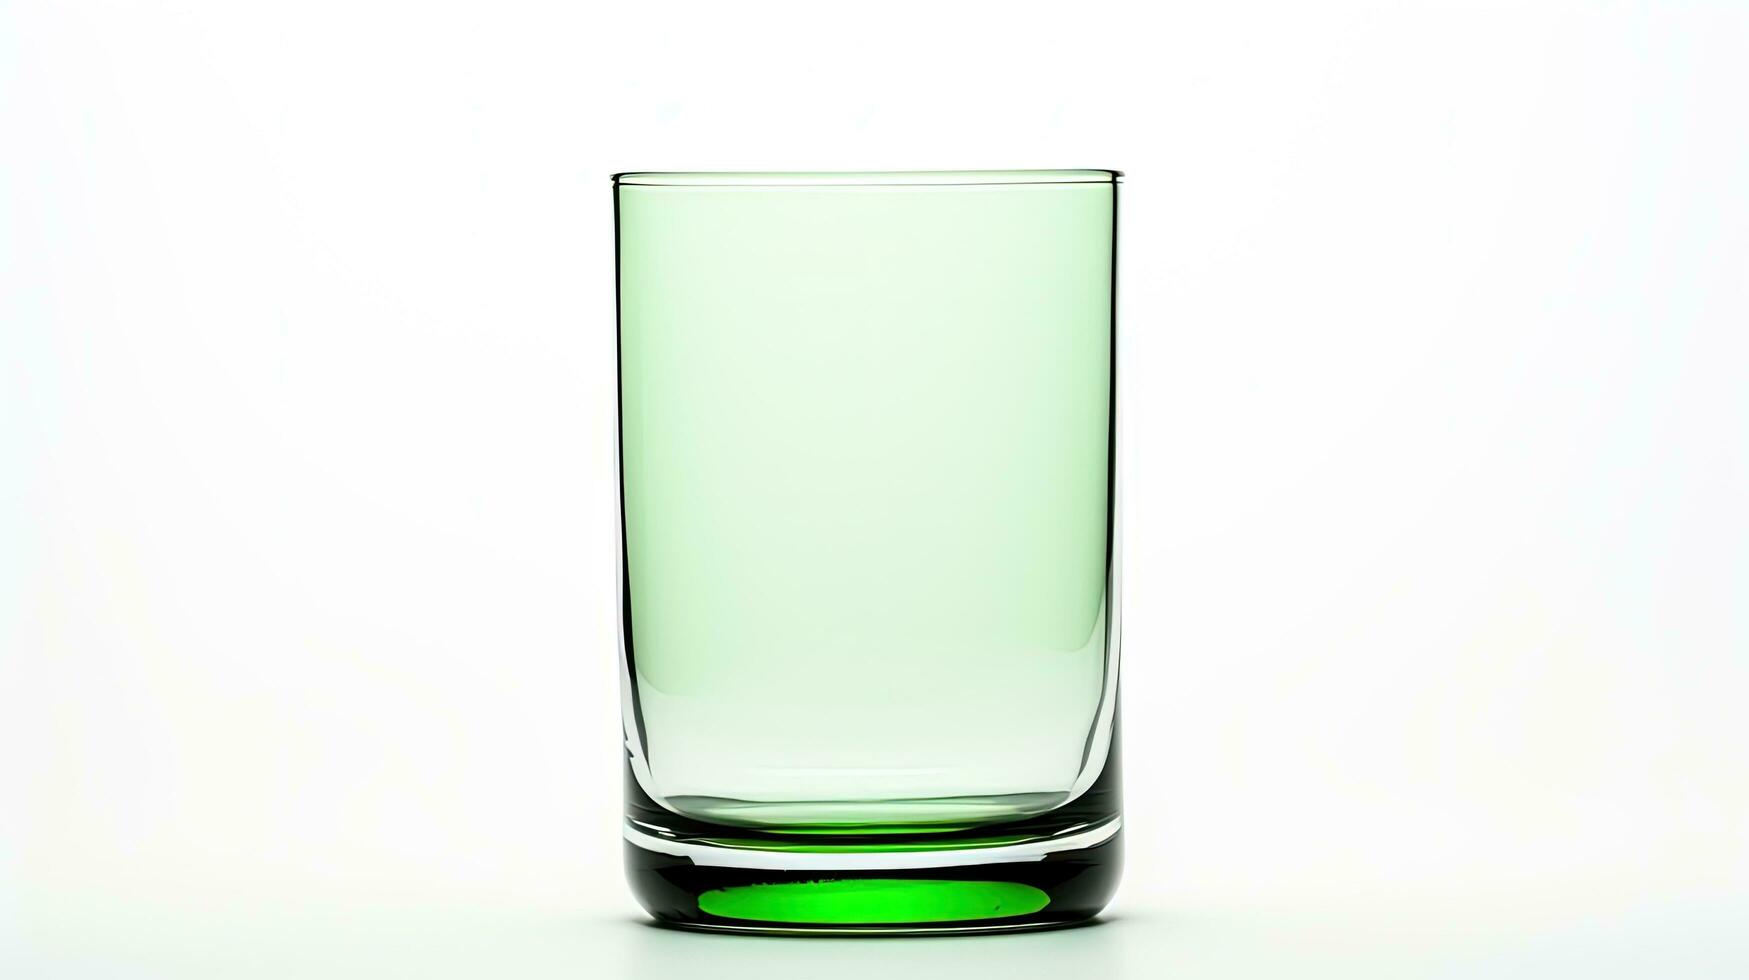 aislado verde vaso en blanco antecedentes. silueta concepto foto